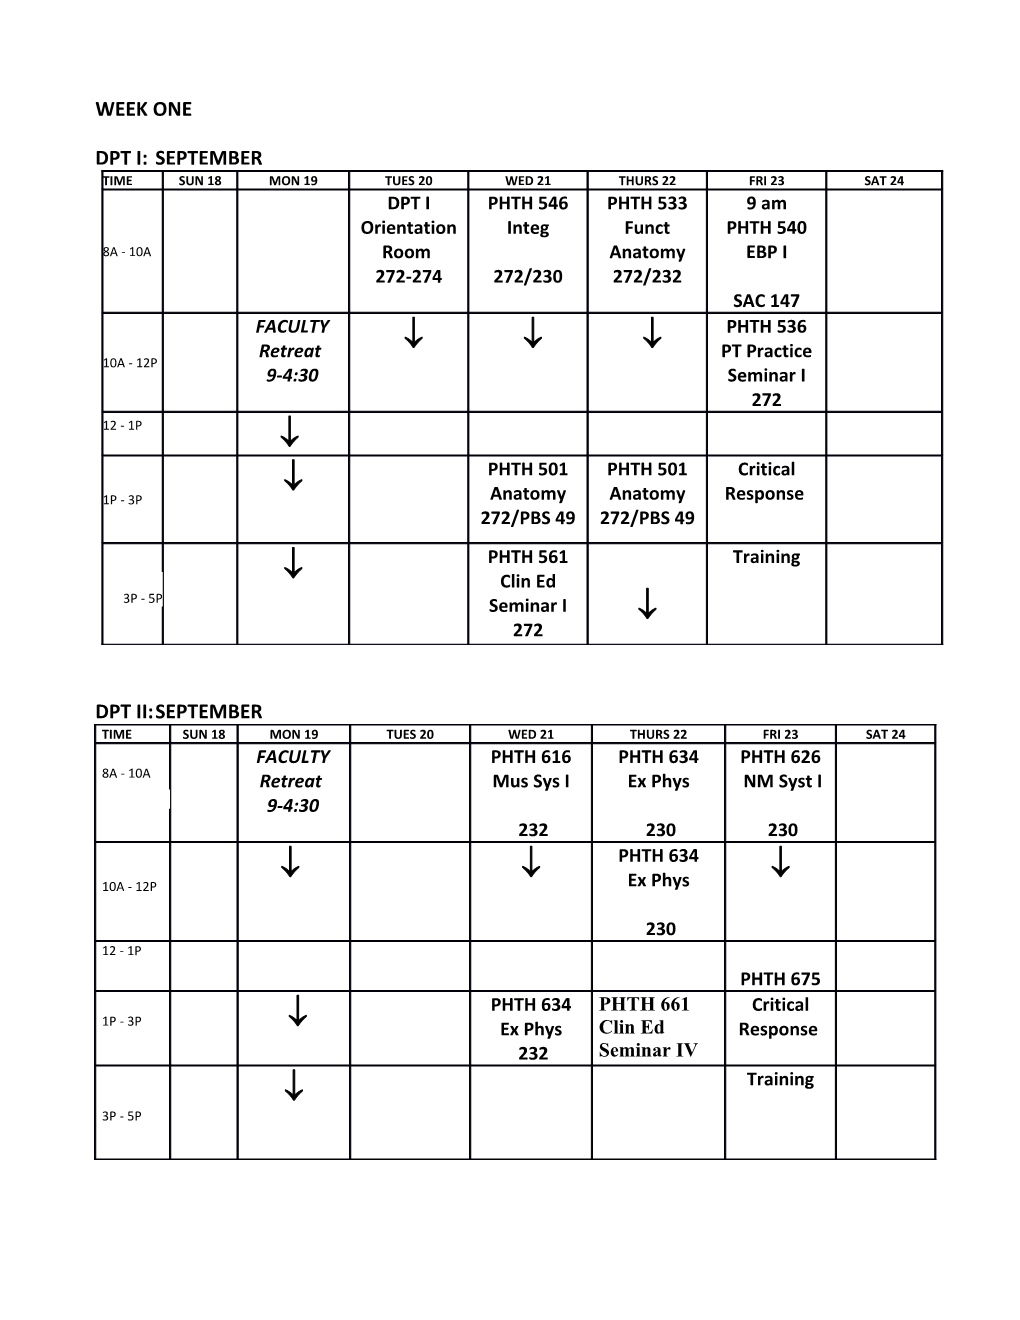 Weekly Planning Schedule